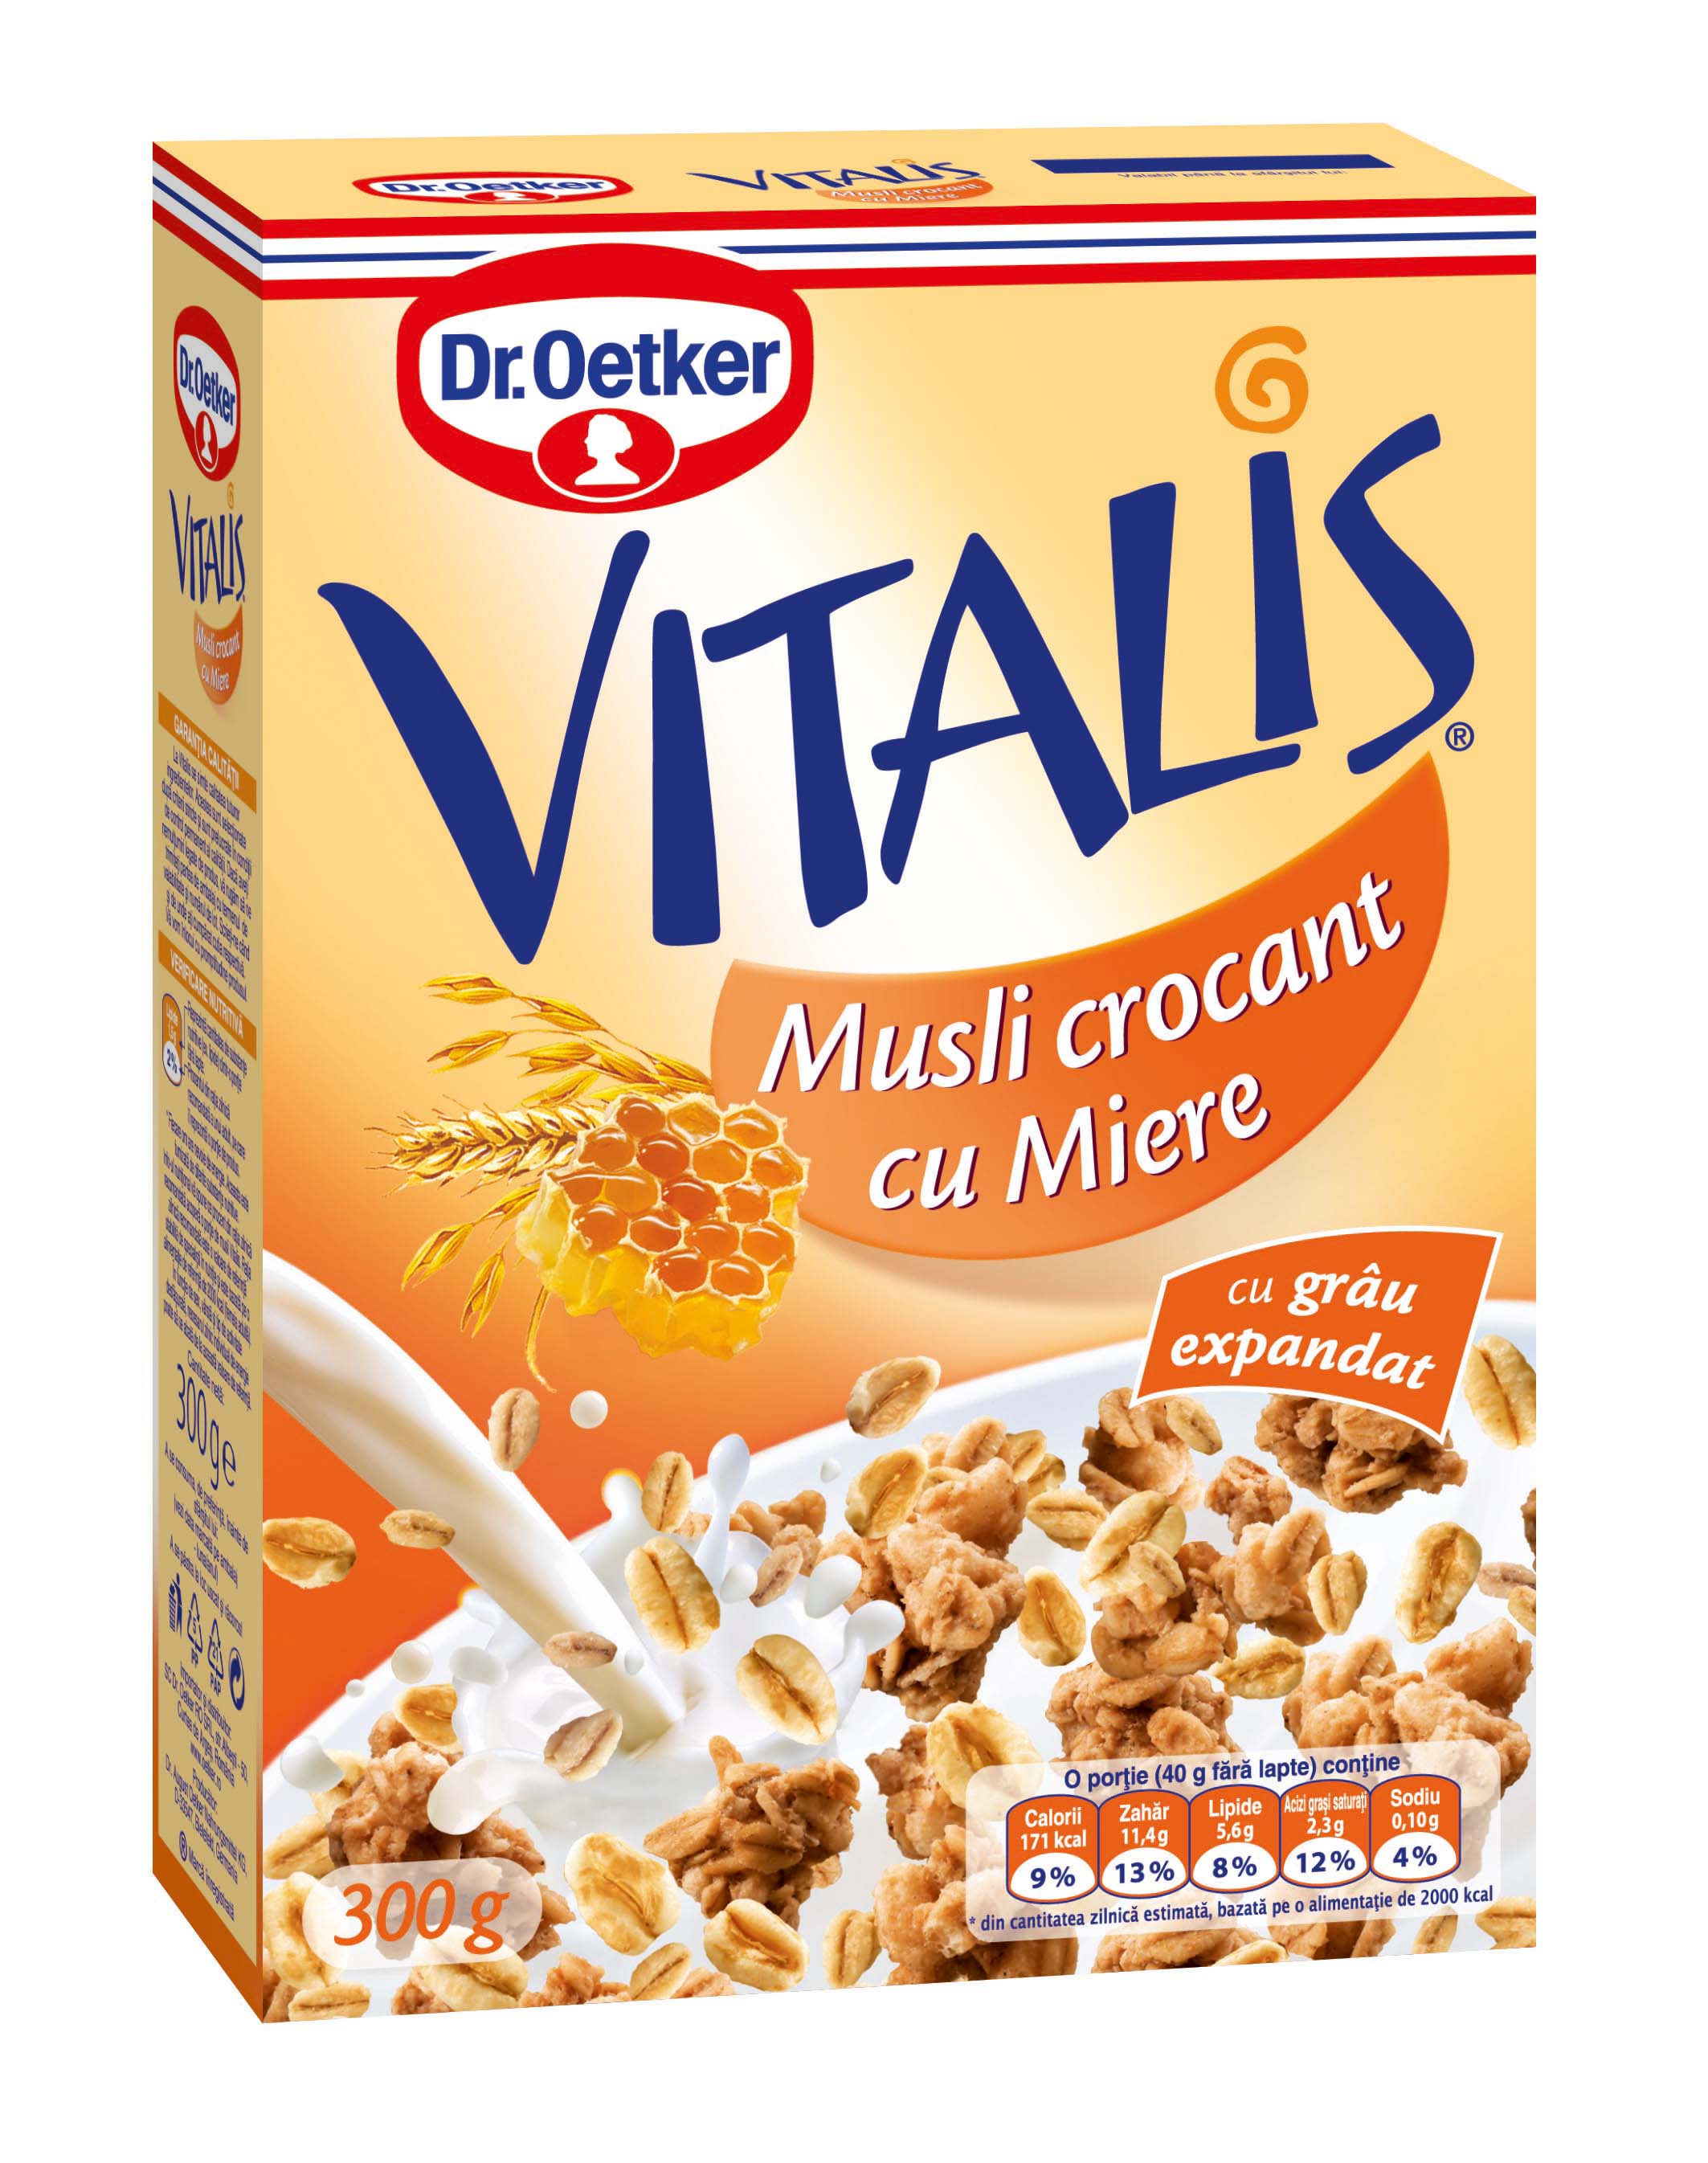 Cereale Musli crocant cu struguri, Vitalis, Dr. Oetker